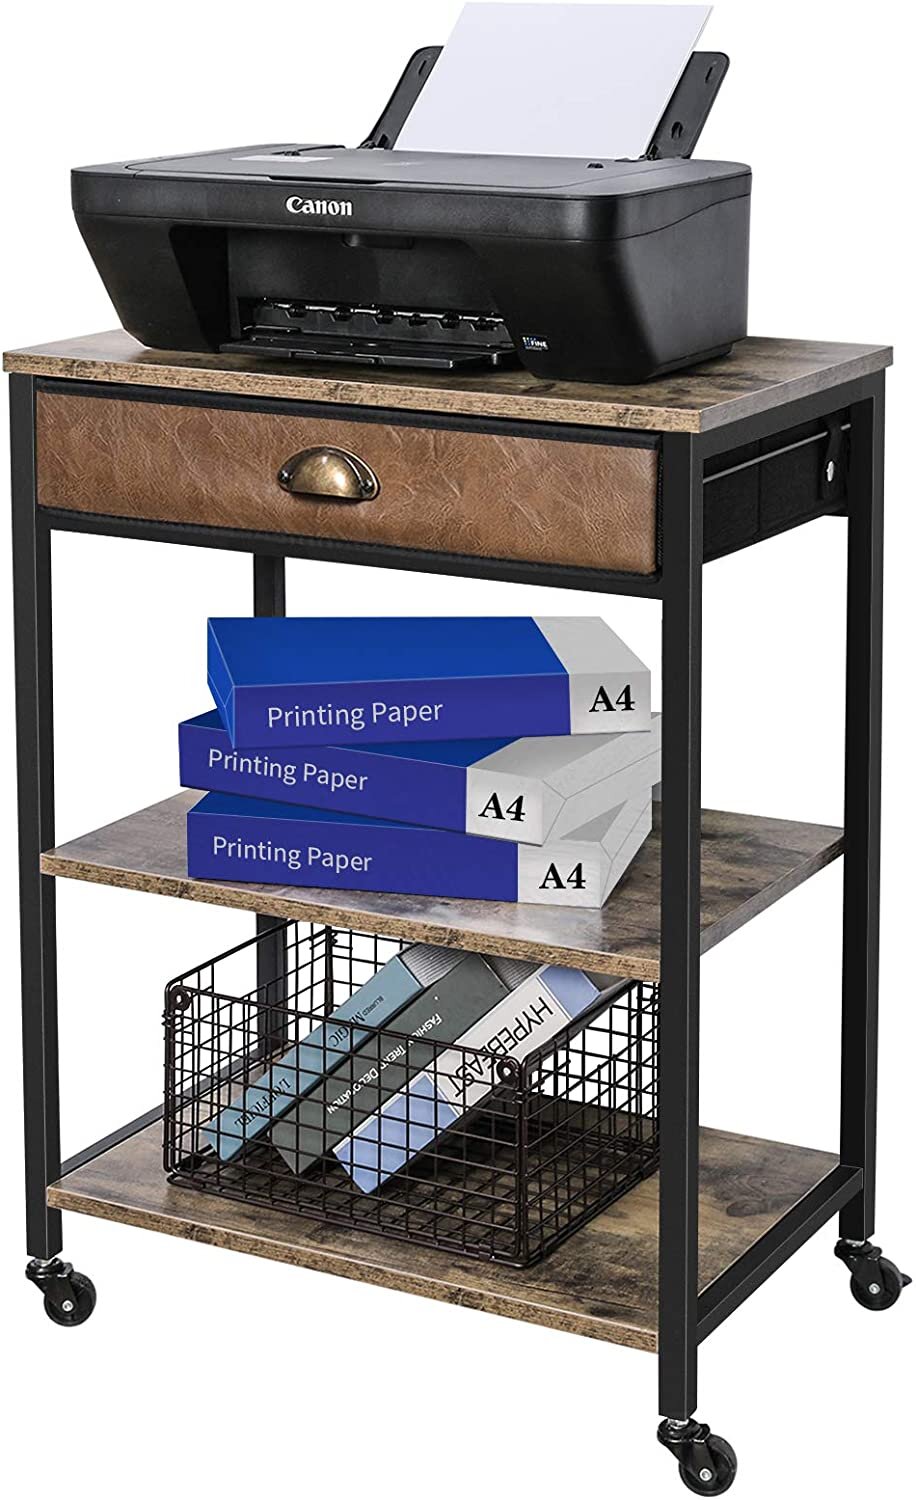 X-cosrack Deskside Mobile Printer Stand with Storage Drawer